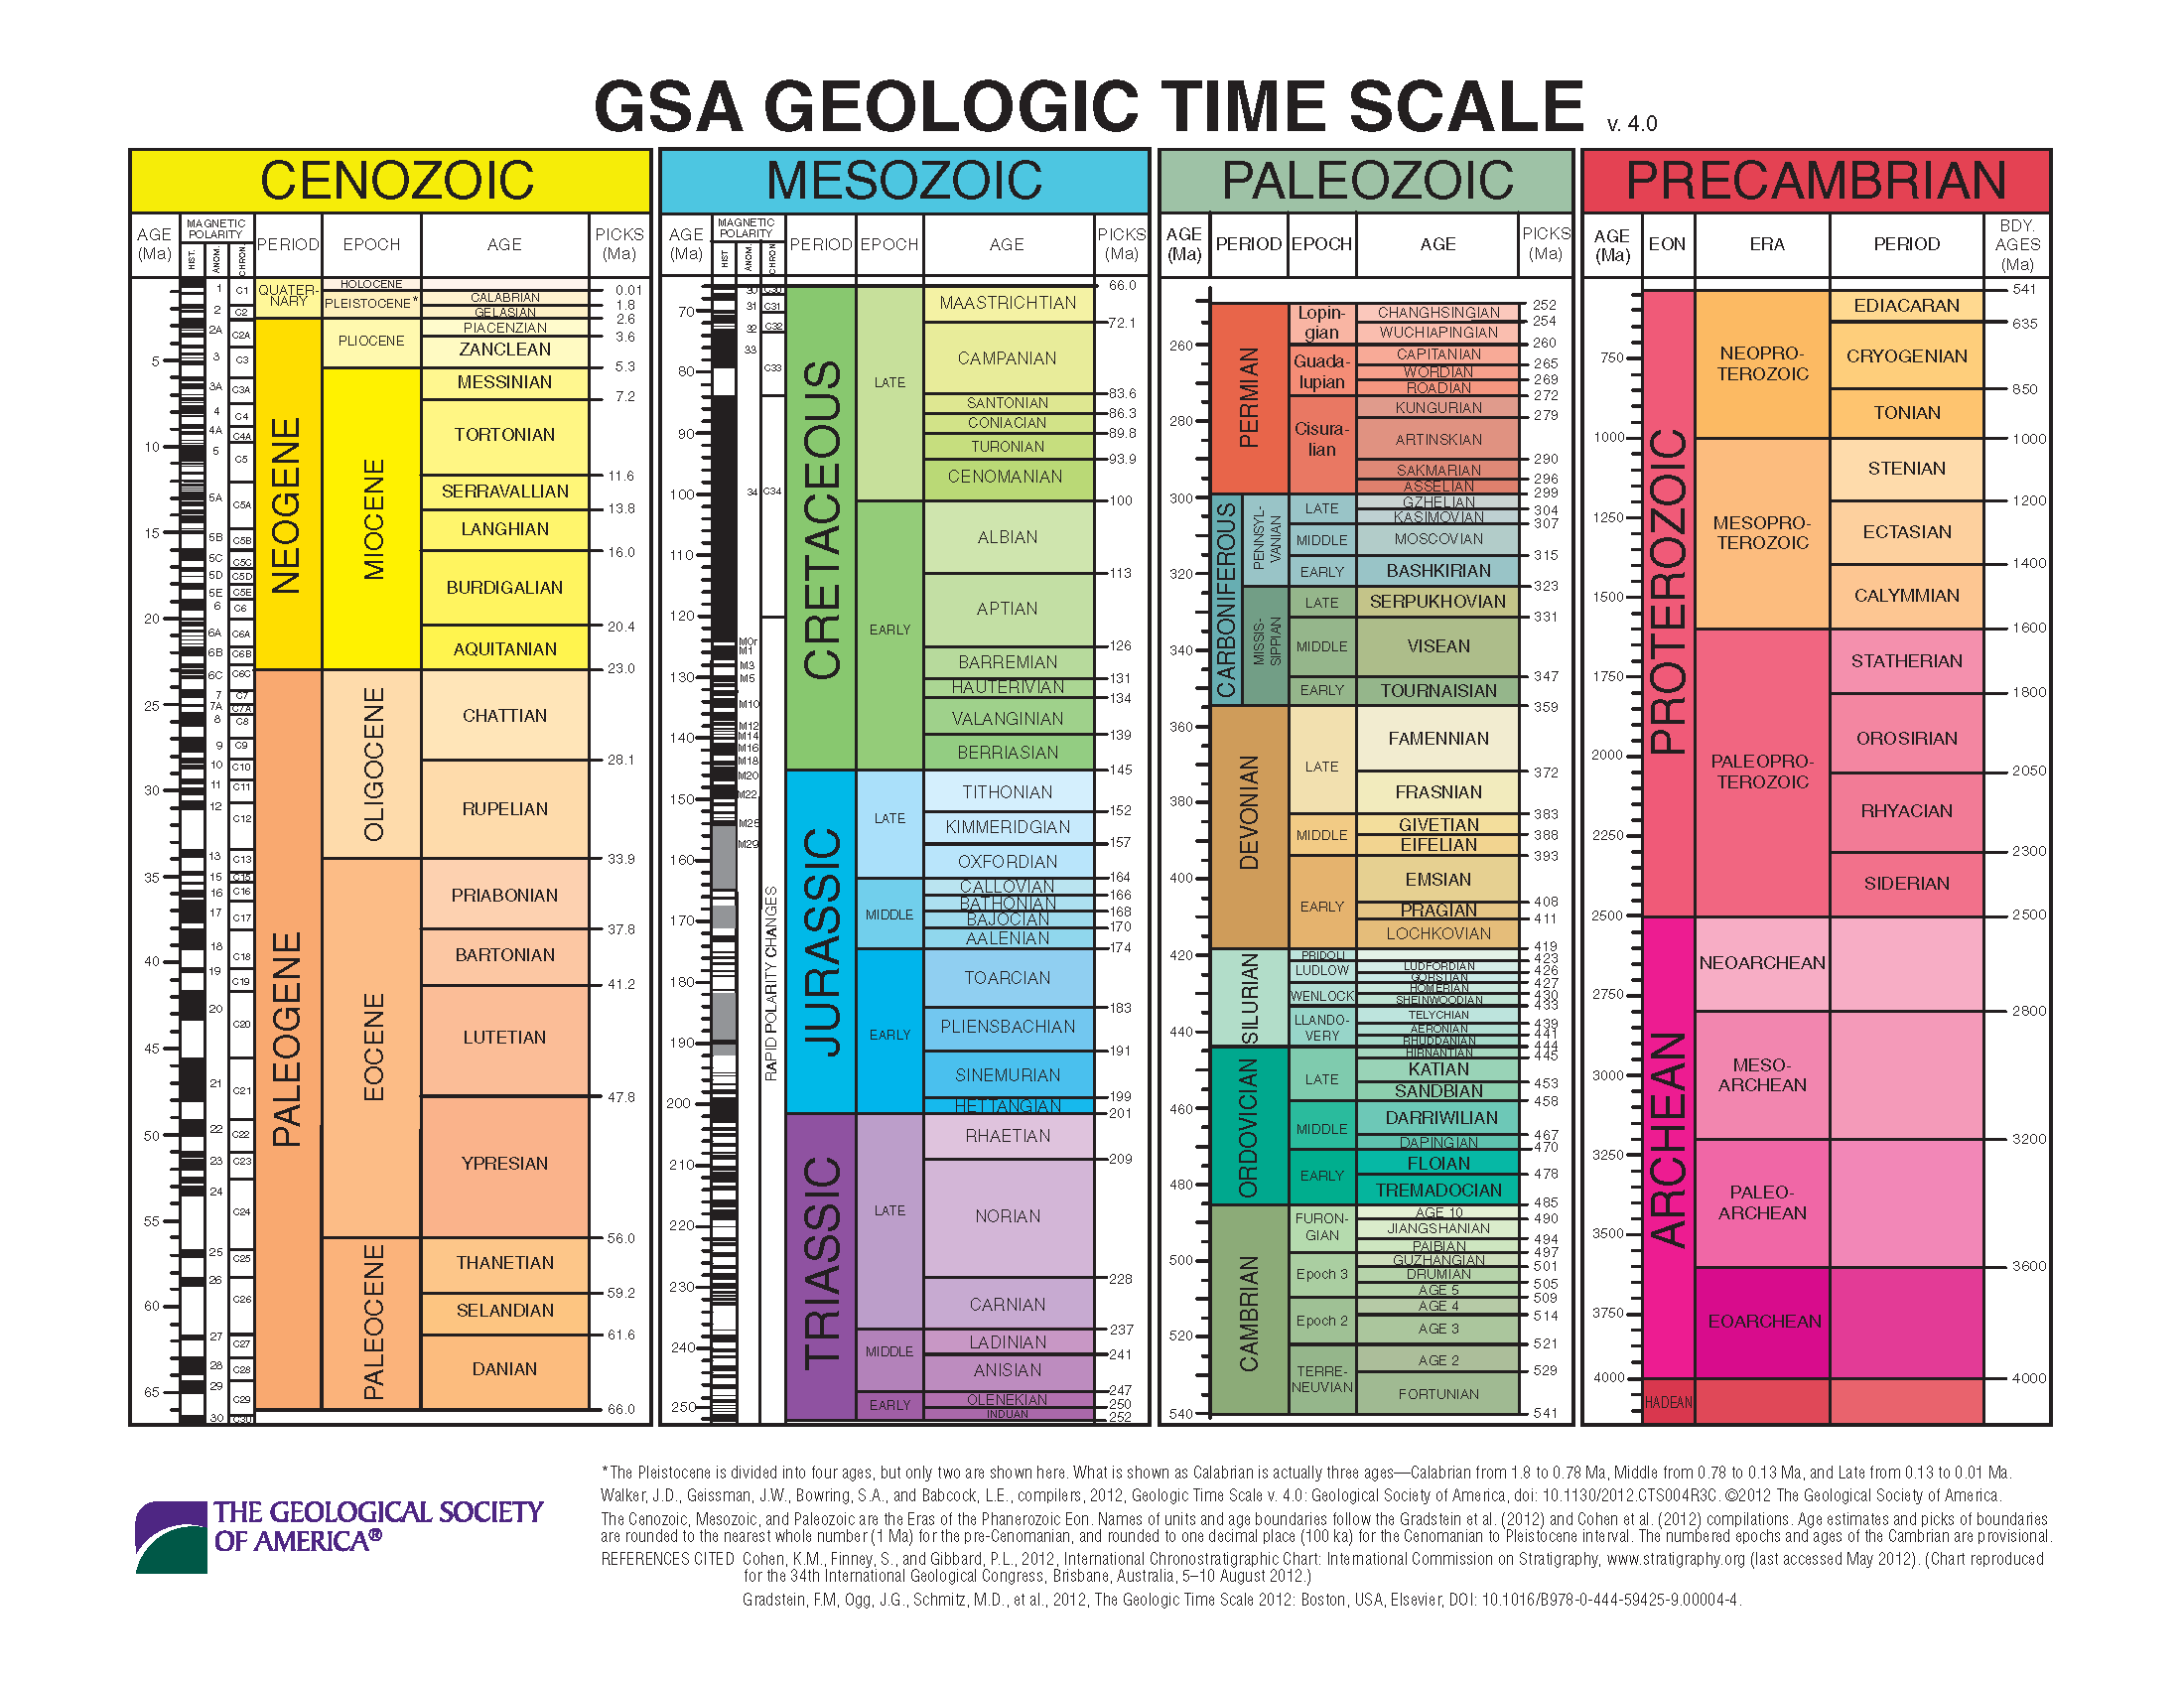 Geologic Society of America Geologic Time Scale, 2012